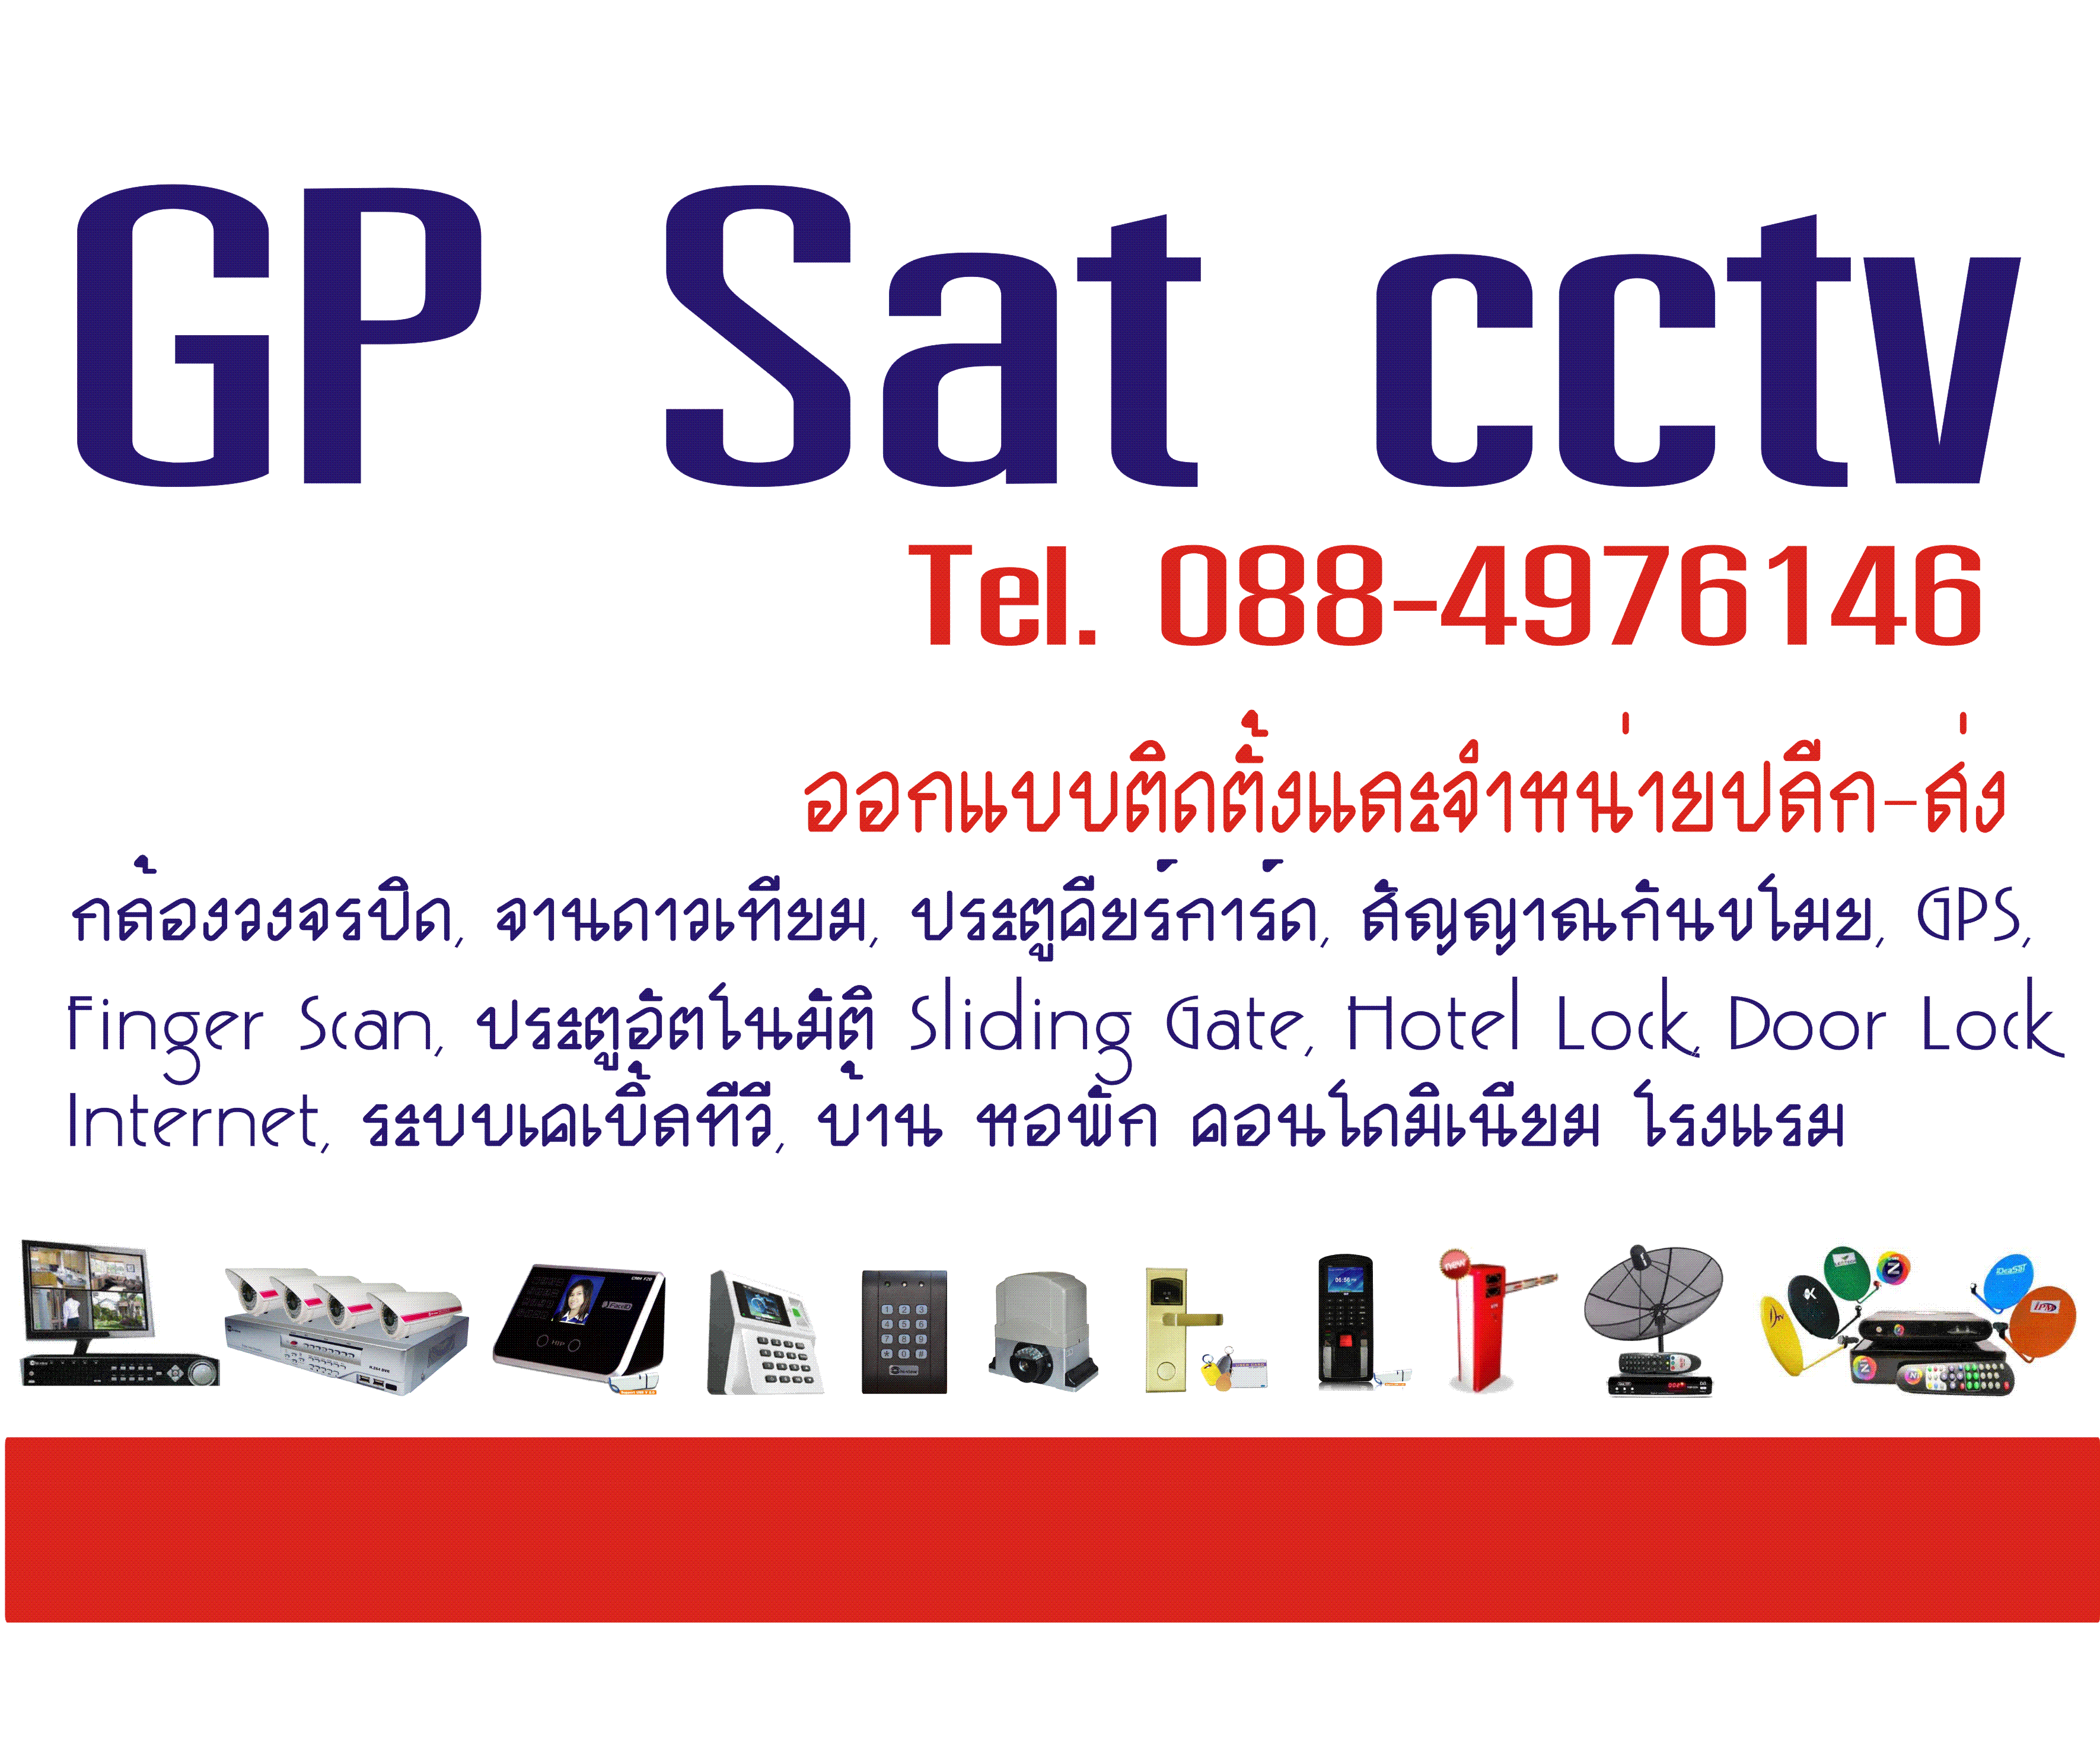 GP Sat cctv ติดตั้งและจำหน่ายกล้องวงจรปิด จานดาวเทียม Internet ระบบควบคุมการเข้า-ออกประตูด้วย Key Card  รูปที่ 1